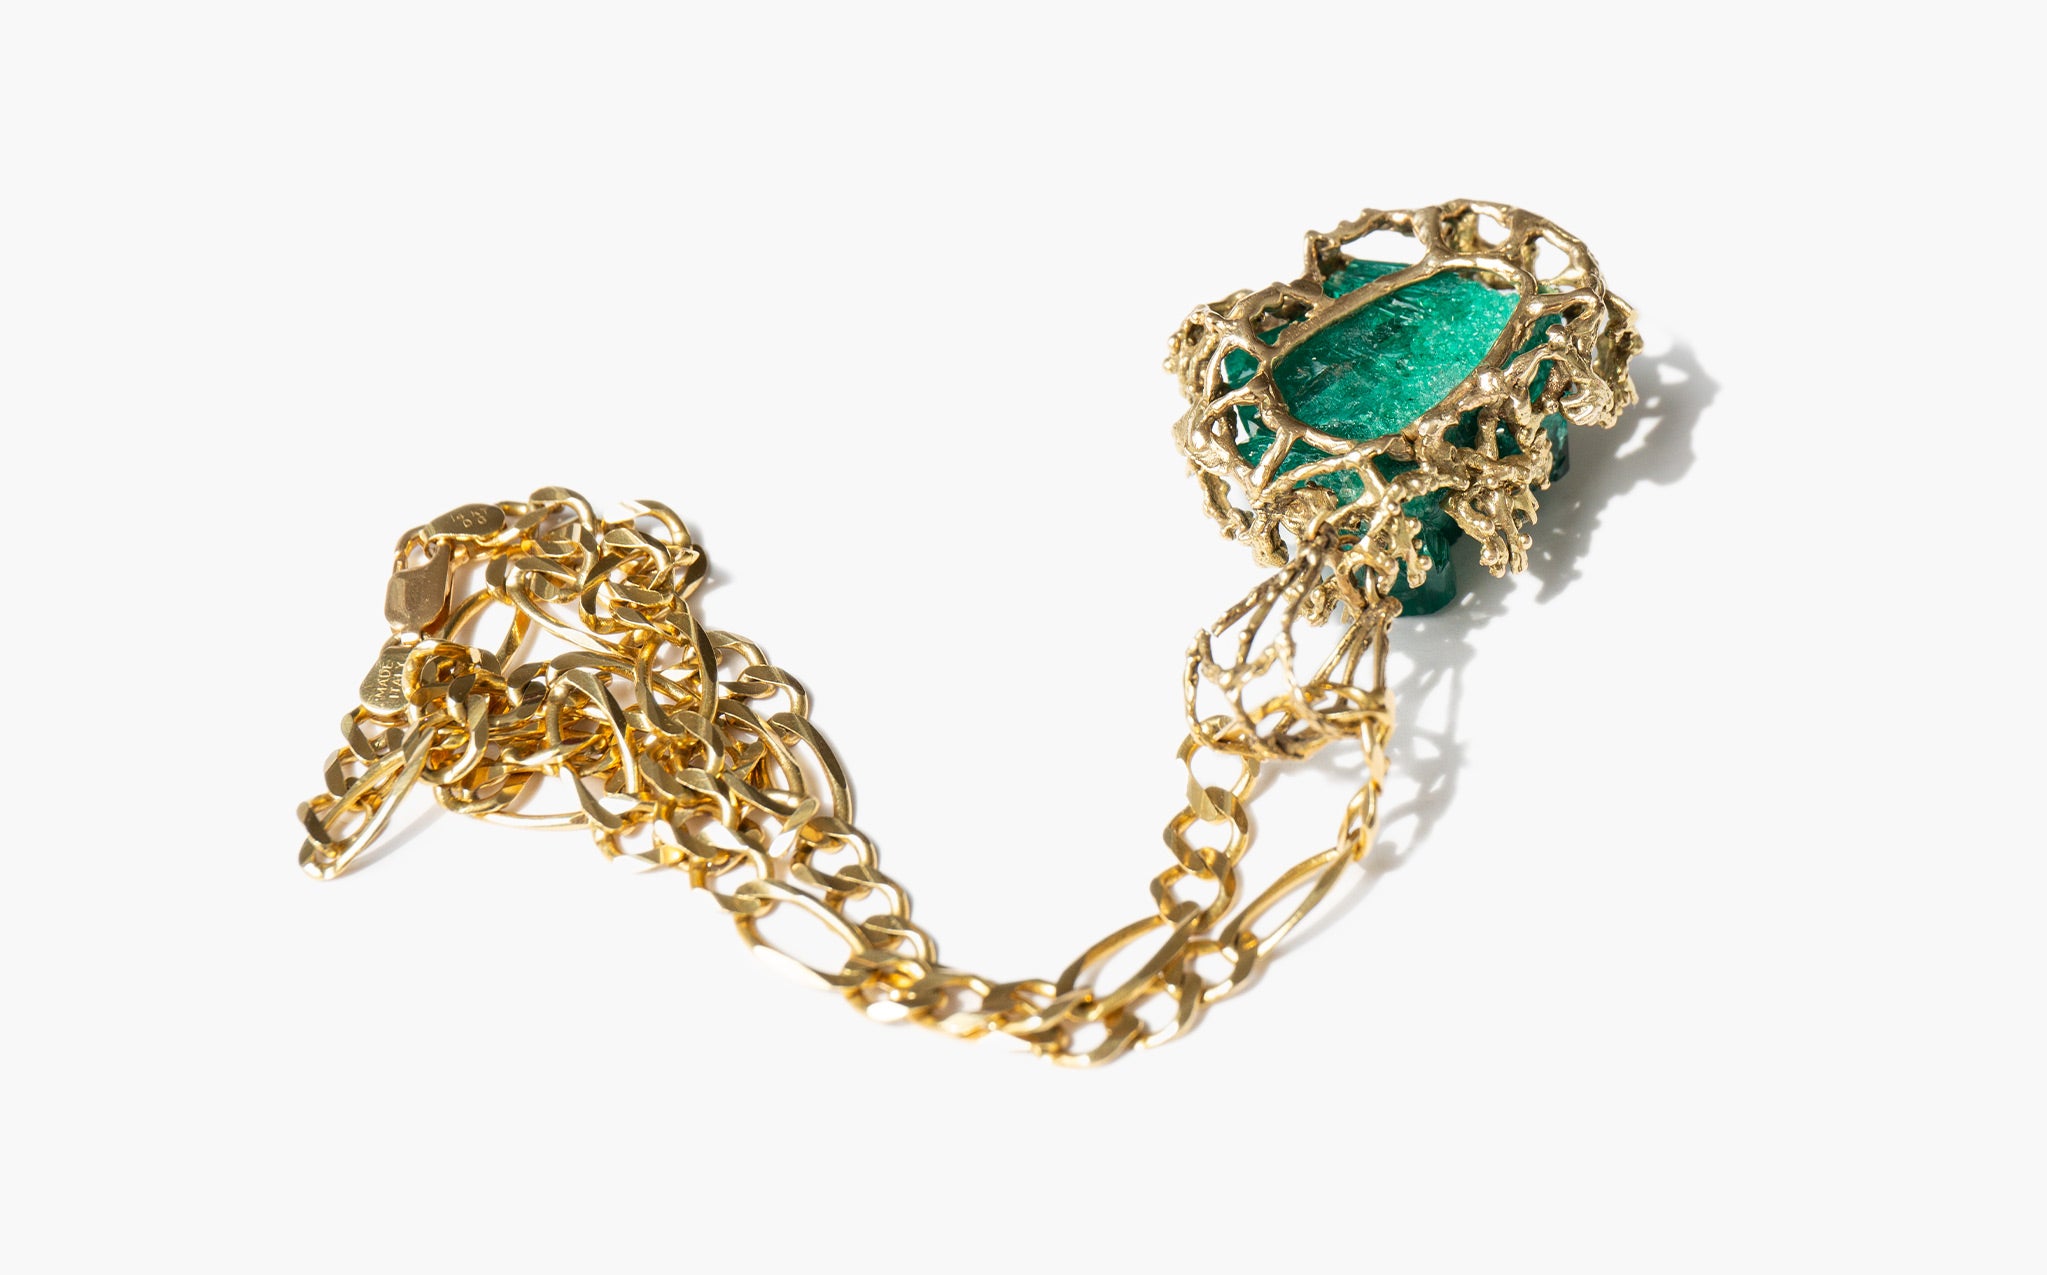 Fantosme Emerald Necklace